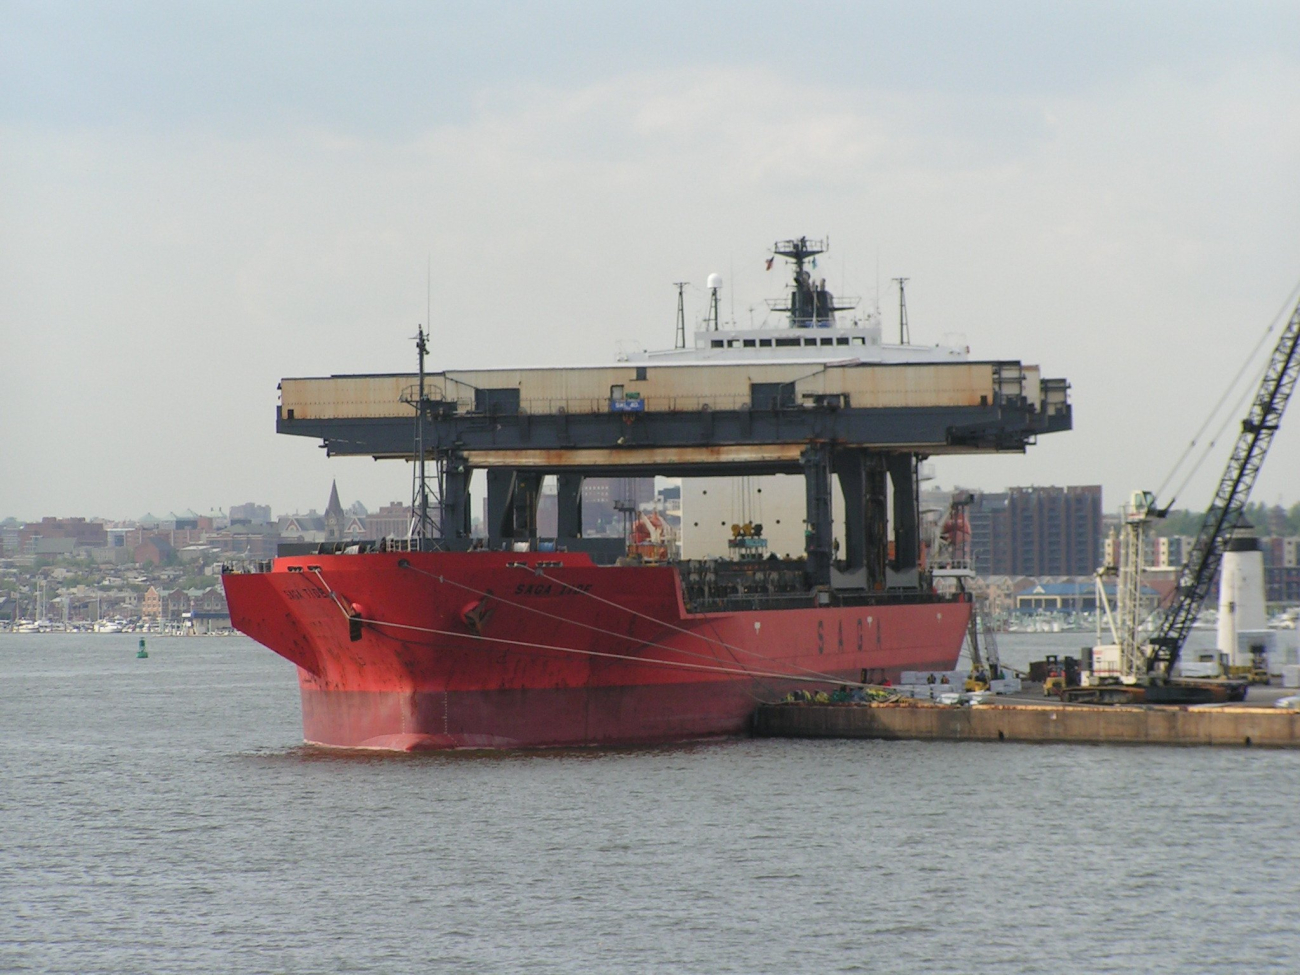 The SAGA TIDE, a bulk carrier